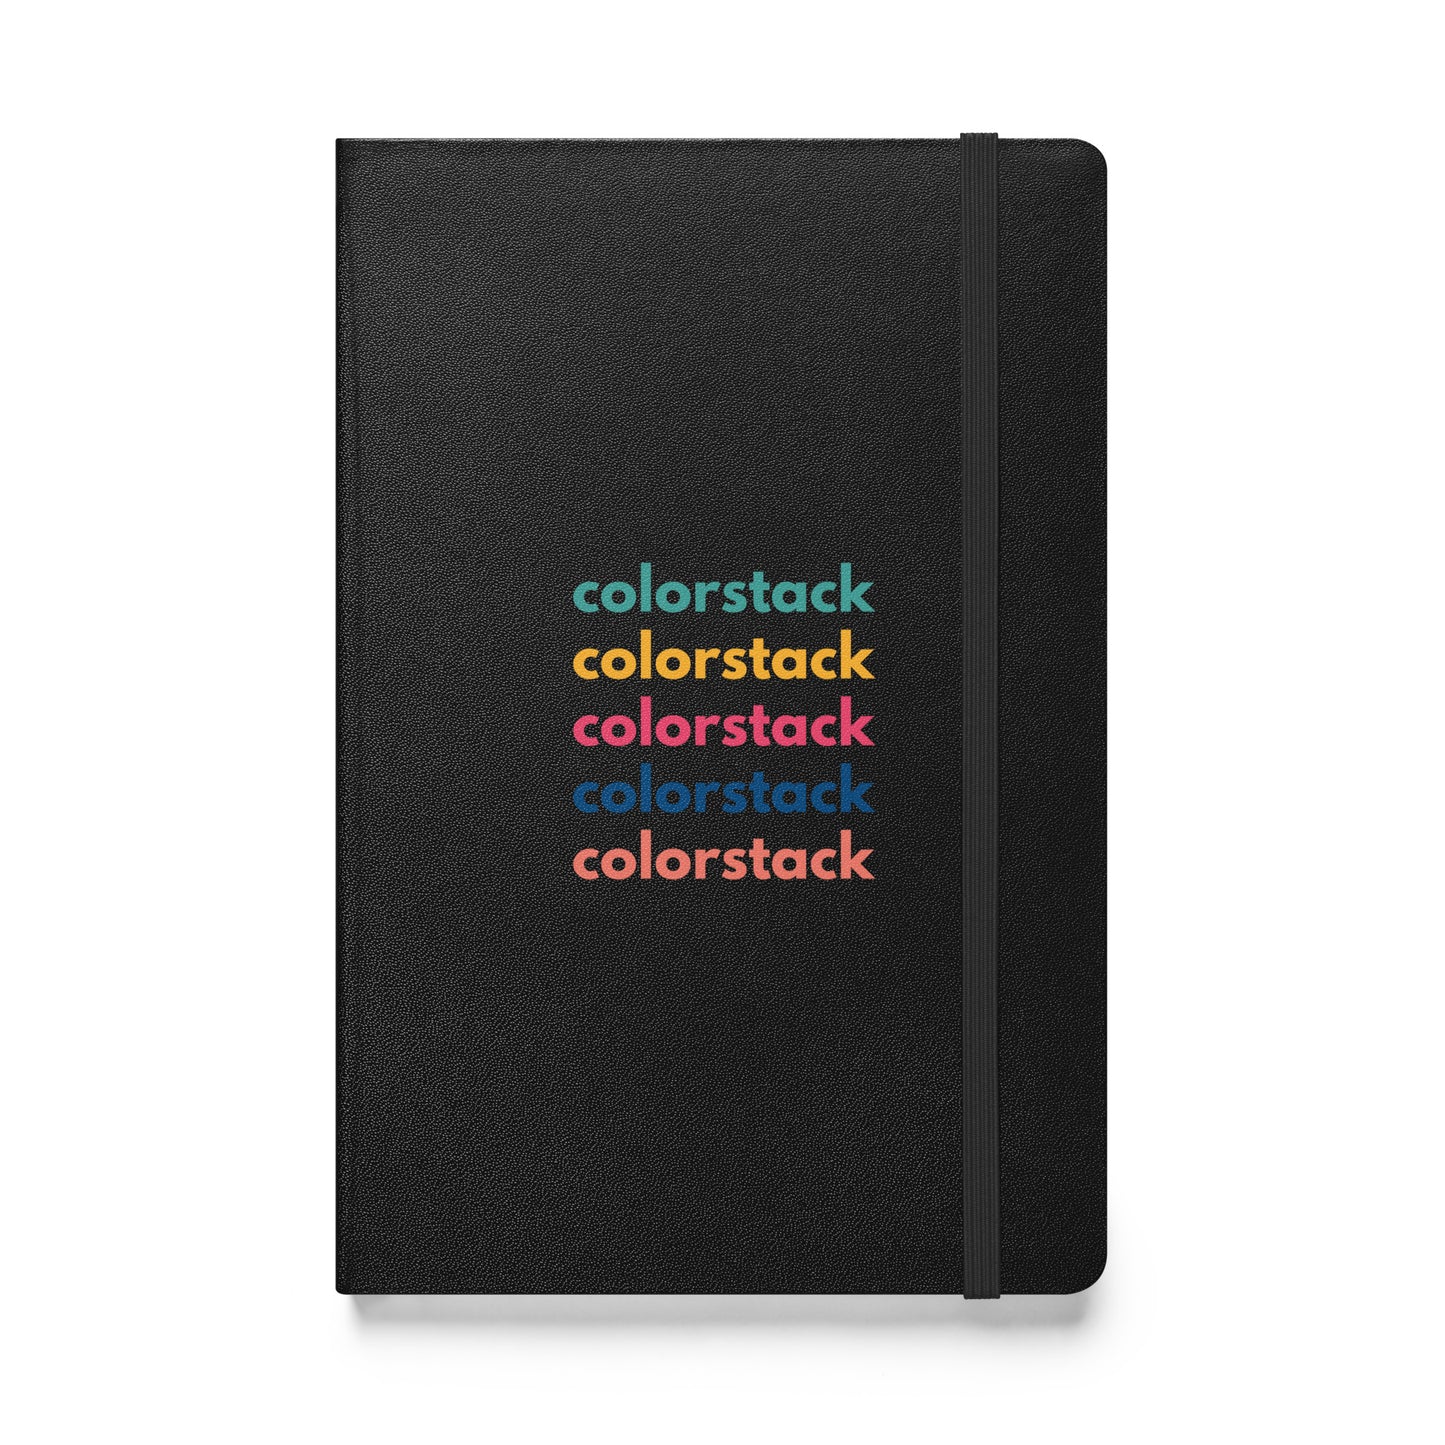 ColorStack Hardcover Bound Notebook